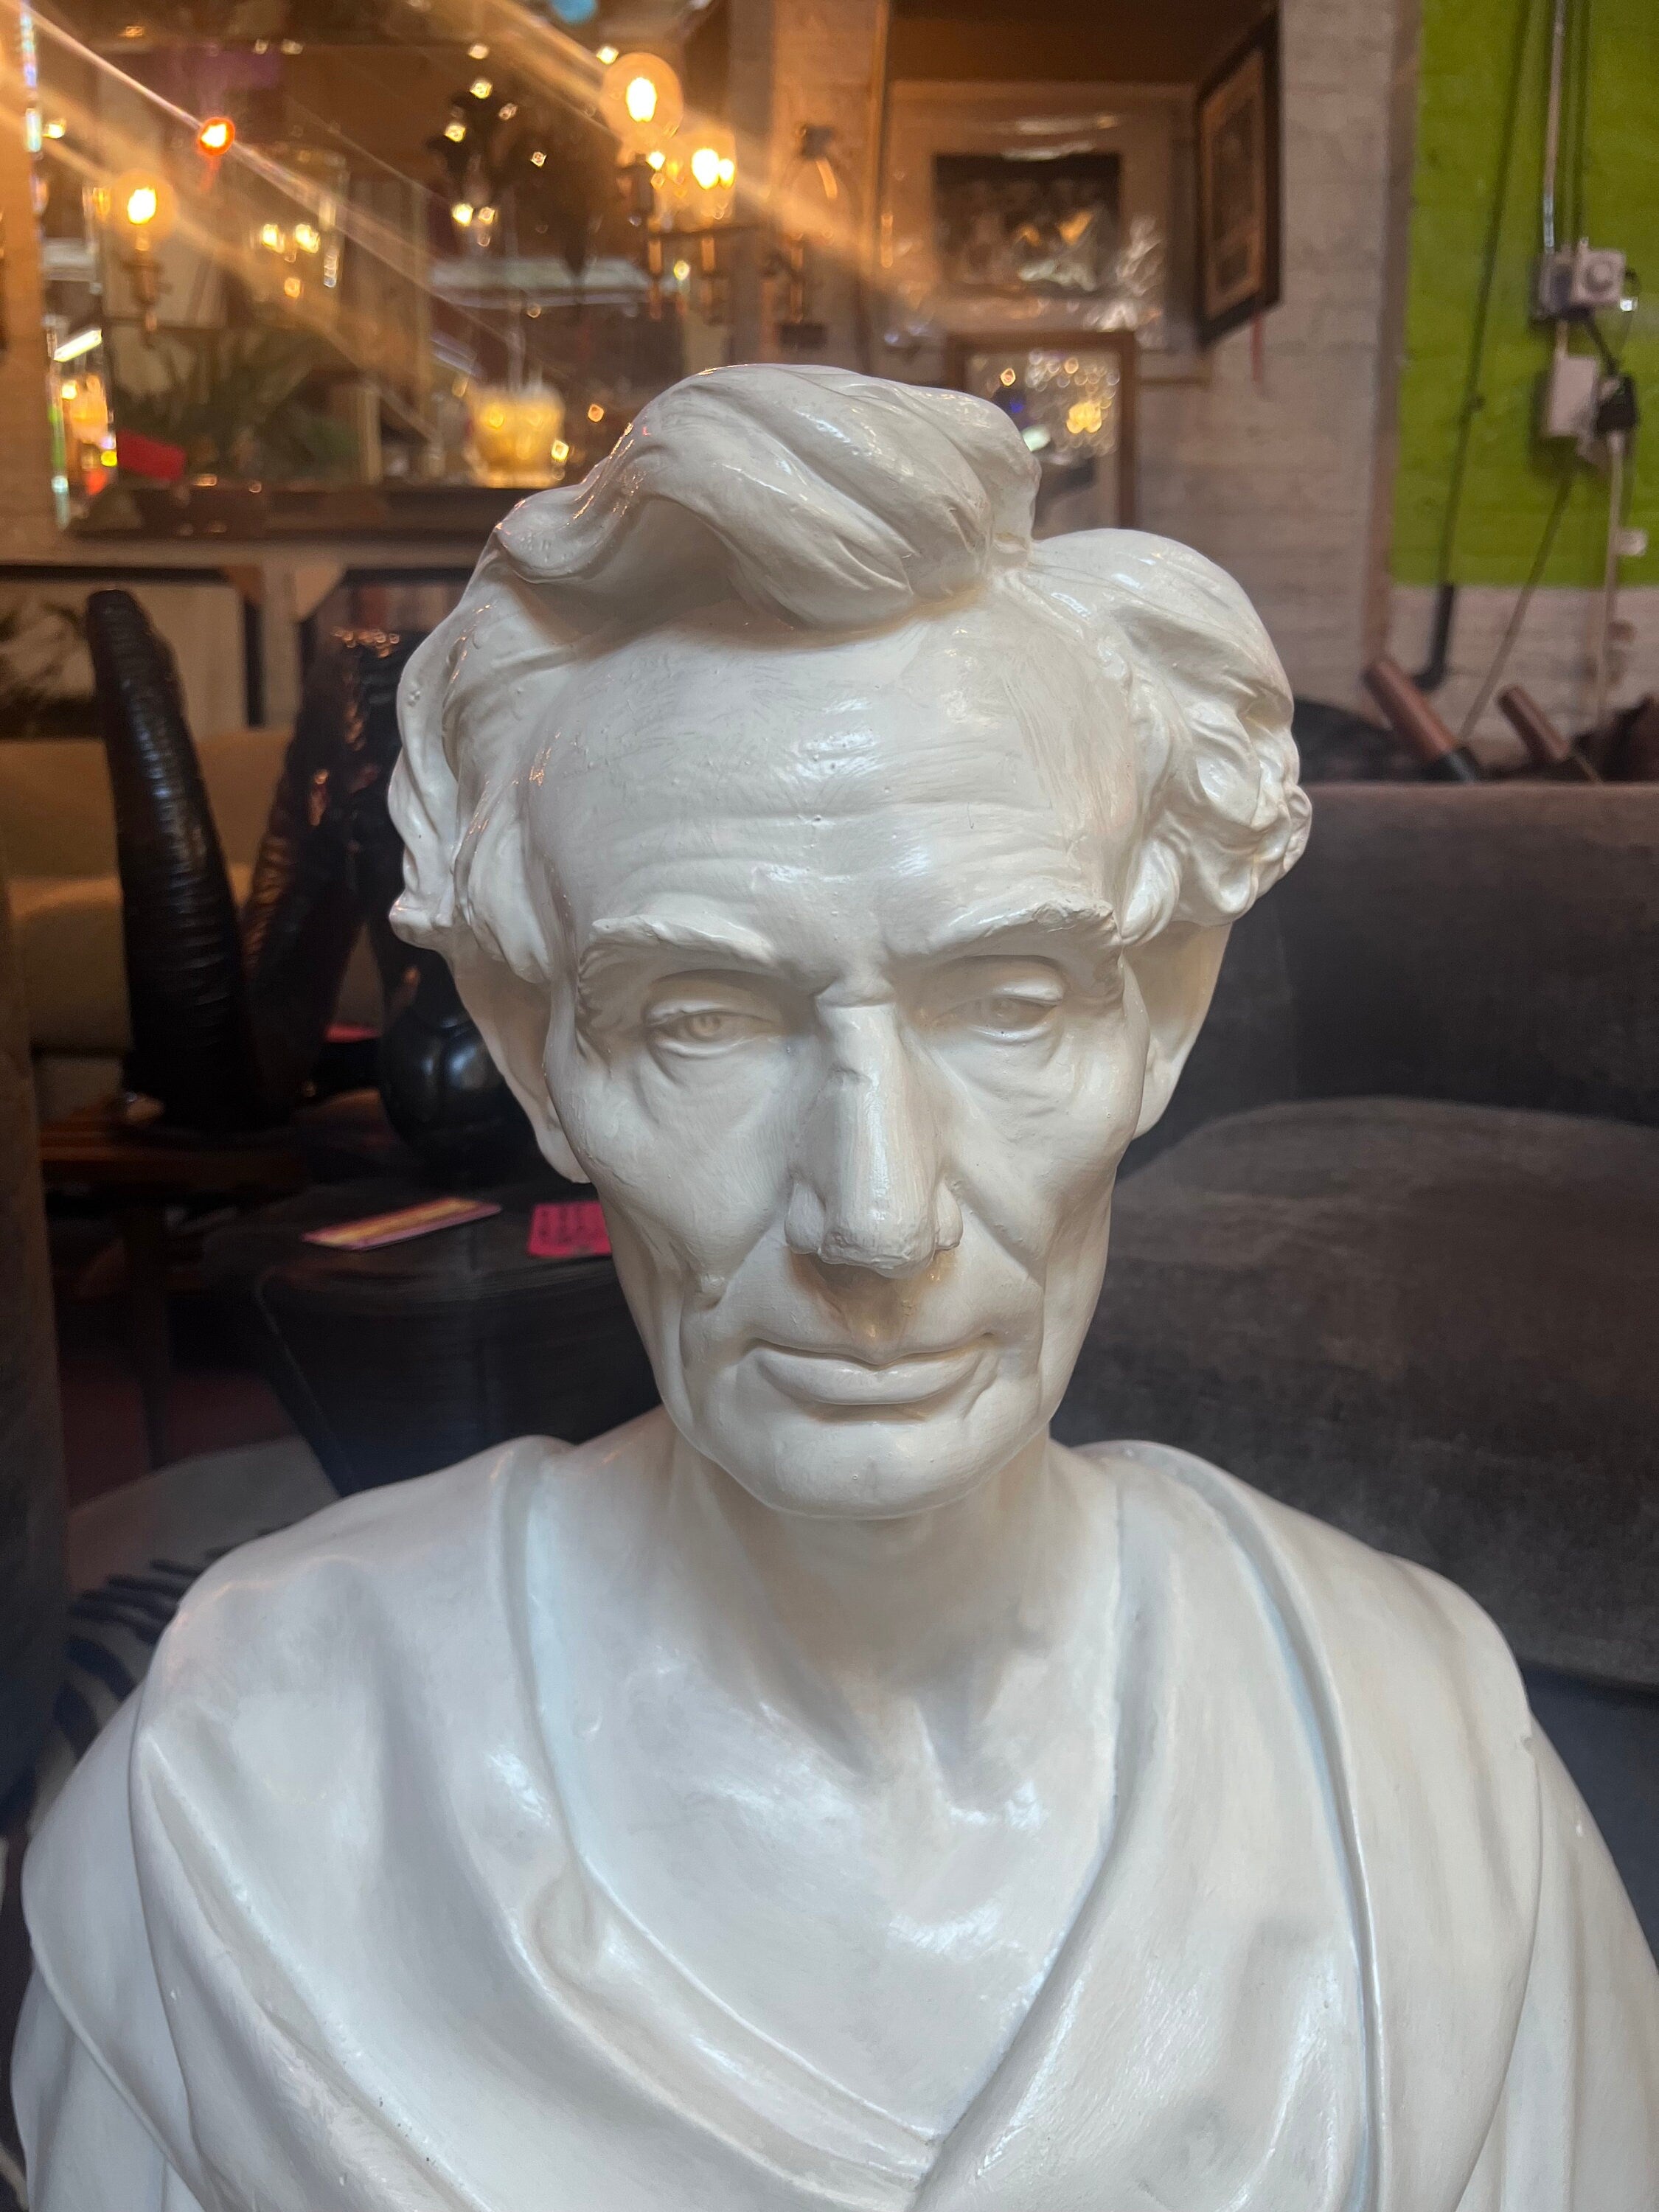 Leonard W. Volk Plaster Bust of Abraham Lincoln